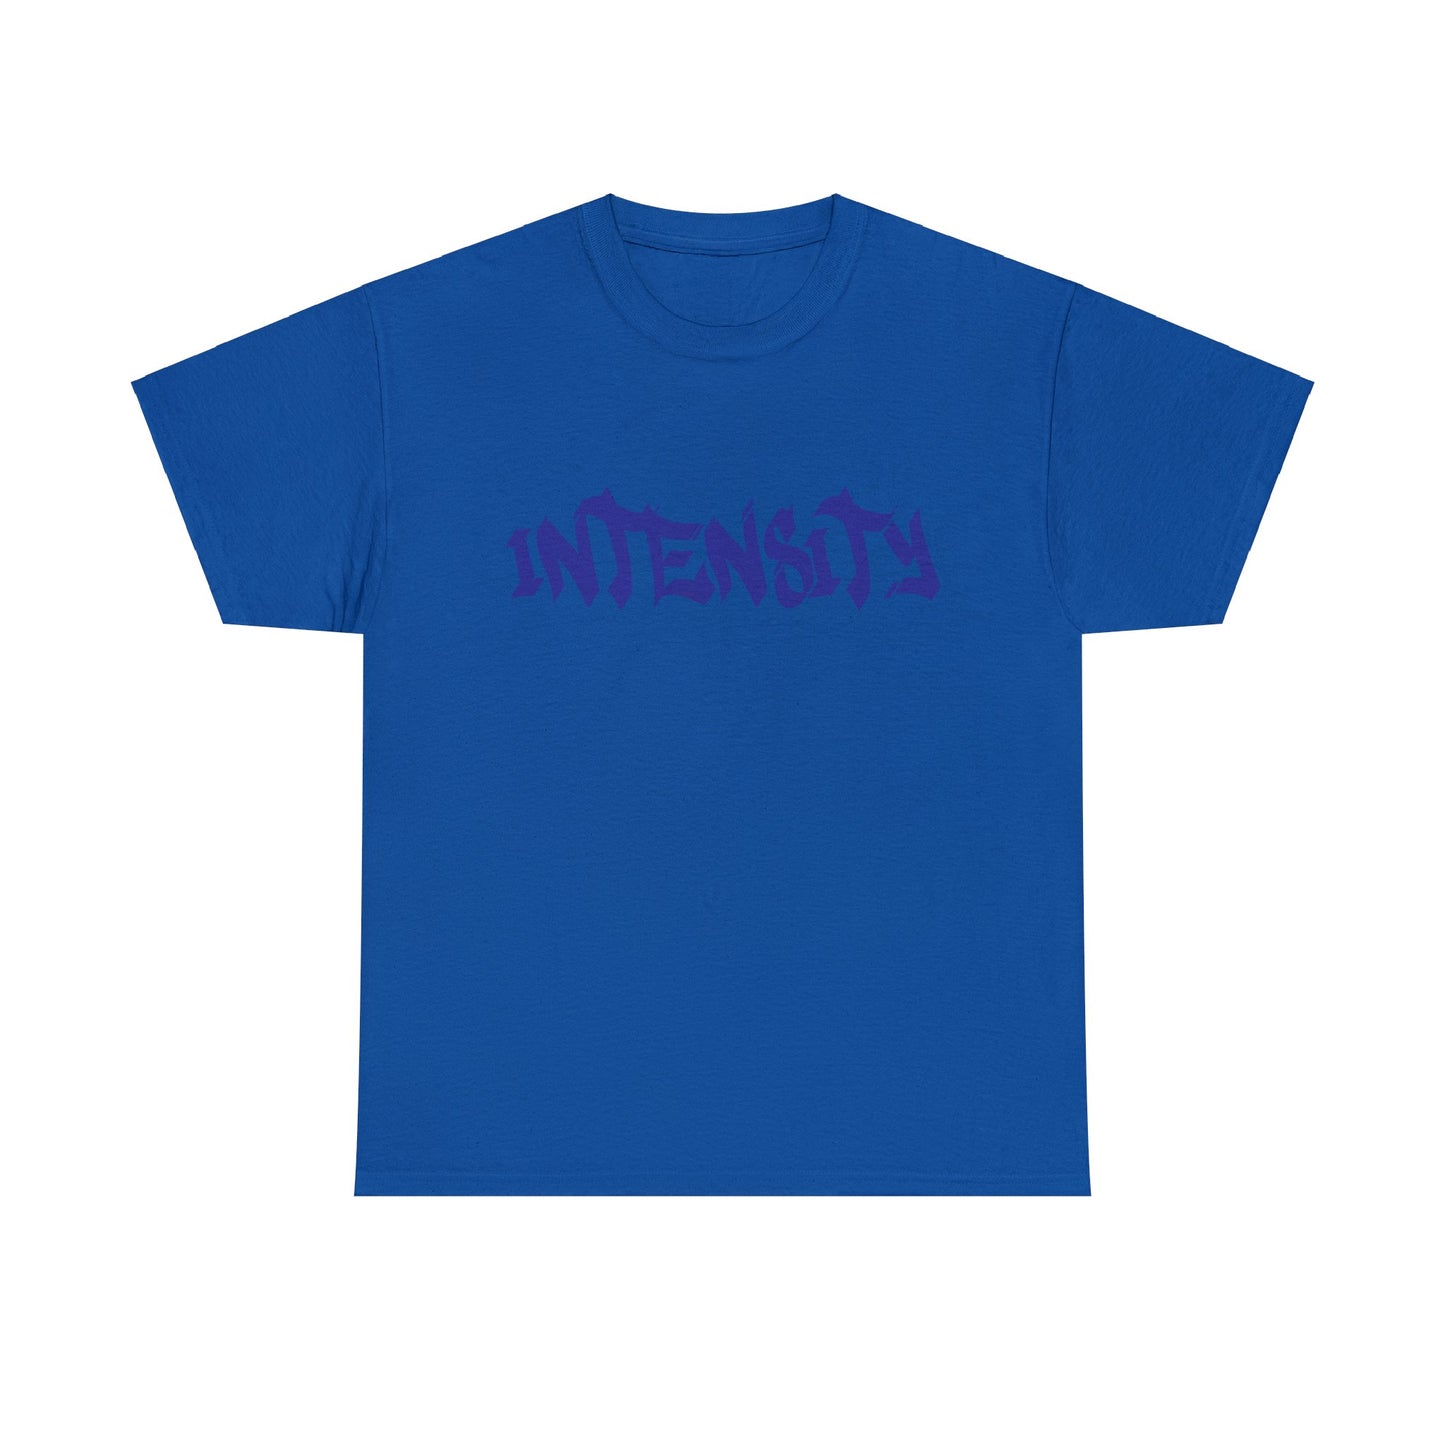 Men's "INTENSITY" T-Shirt Blue Logo